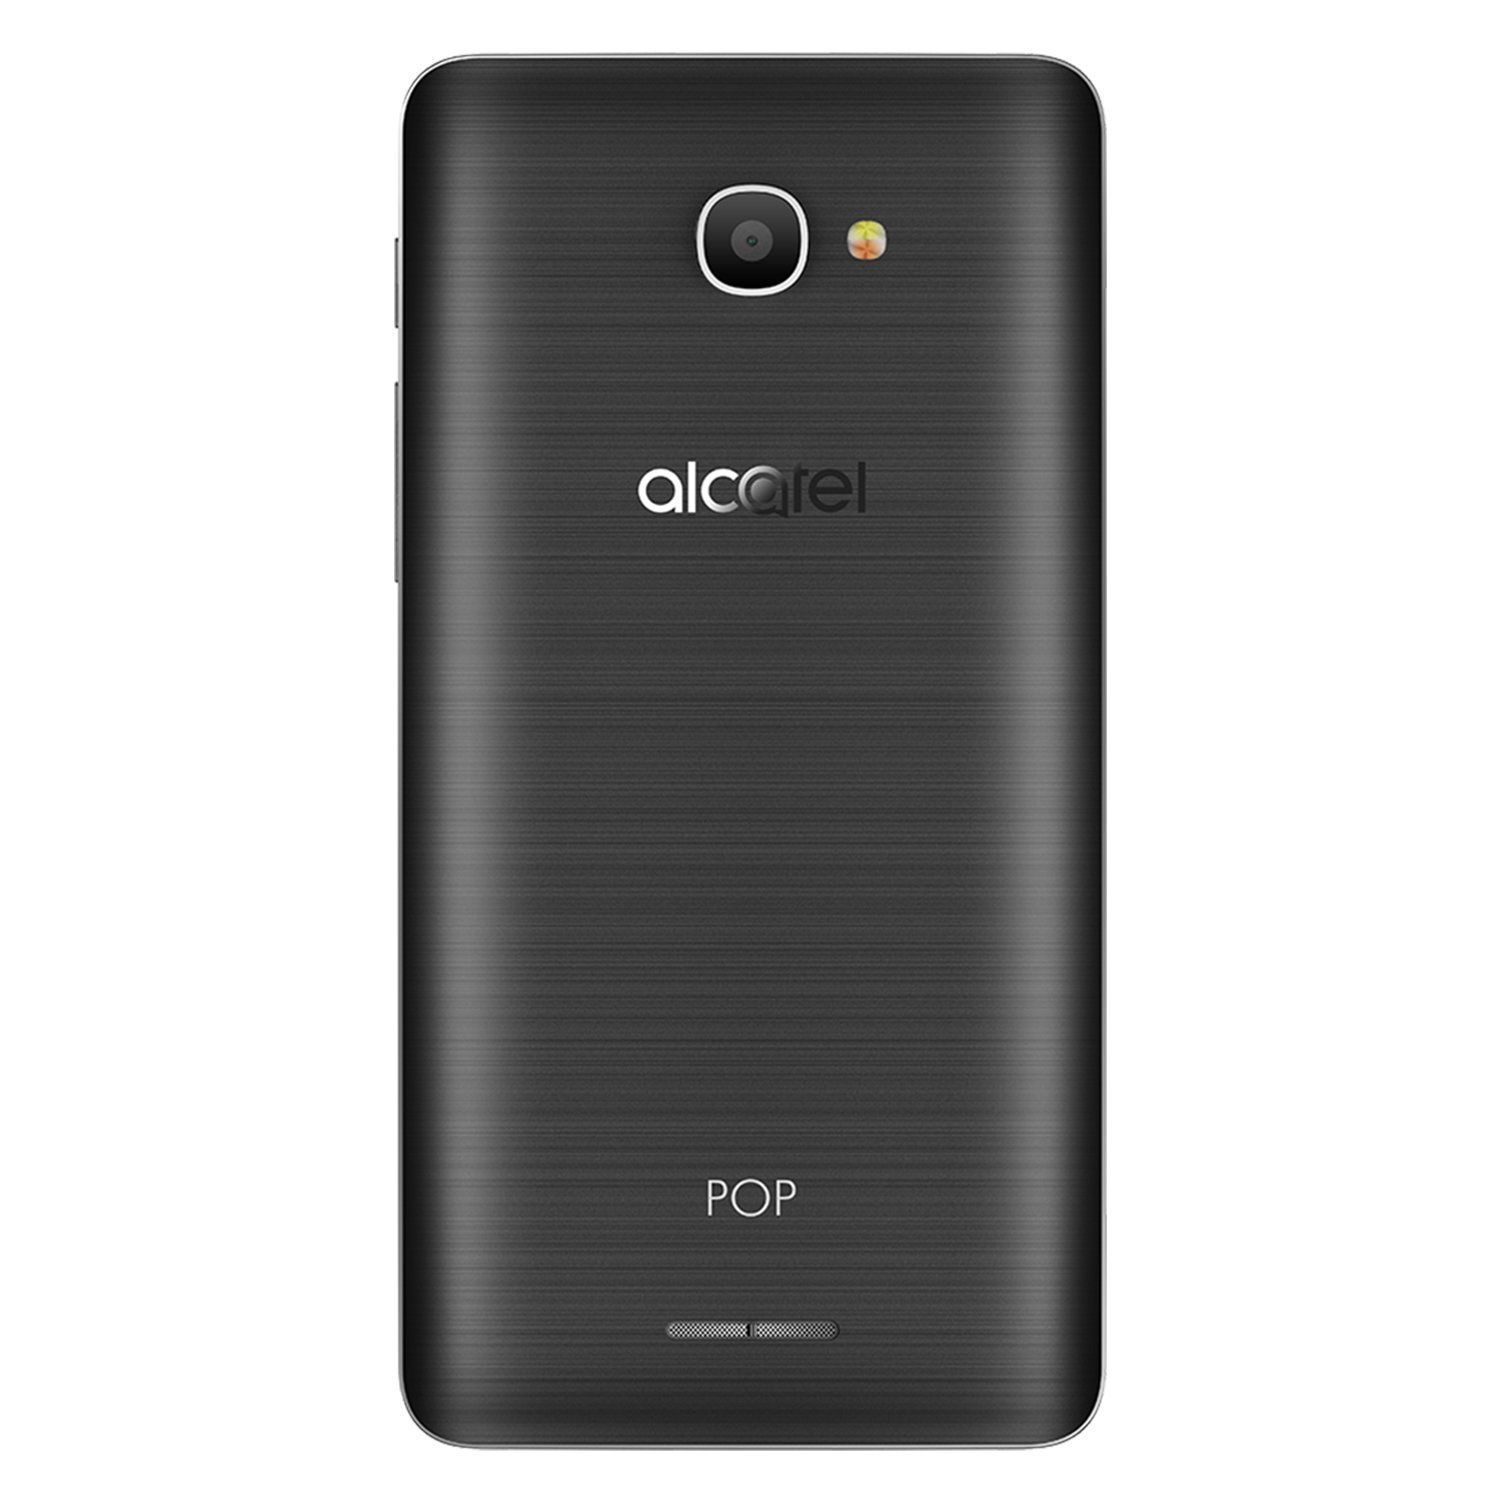 Smartphone Alcatel pop 4s, 5.5", android 6.0 LTE